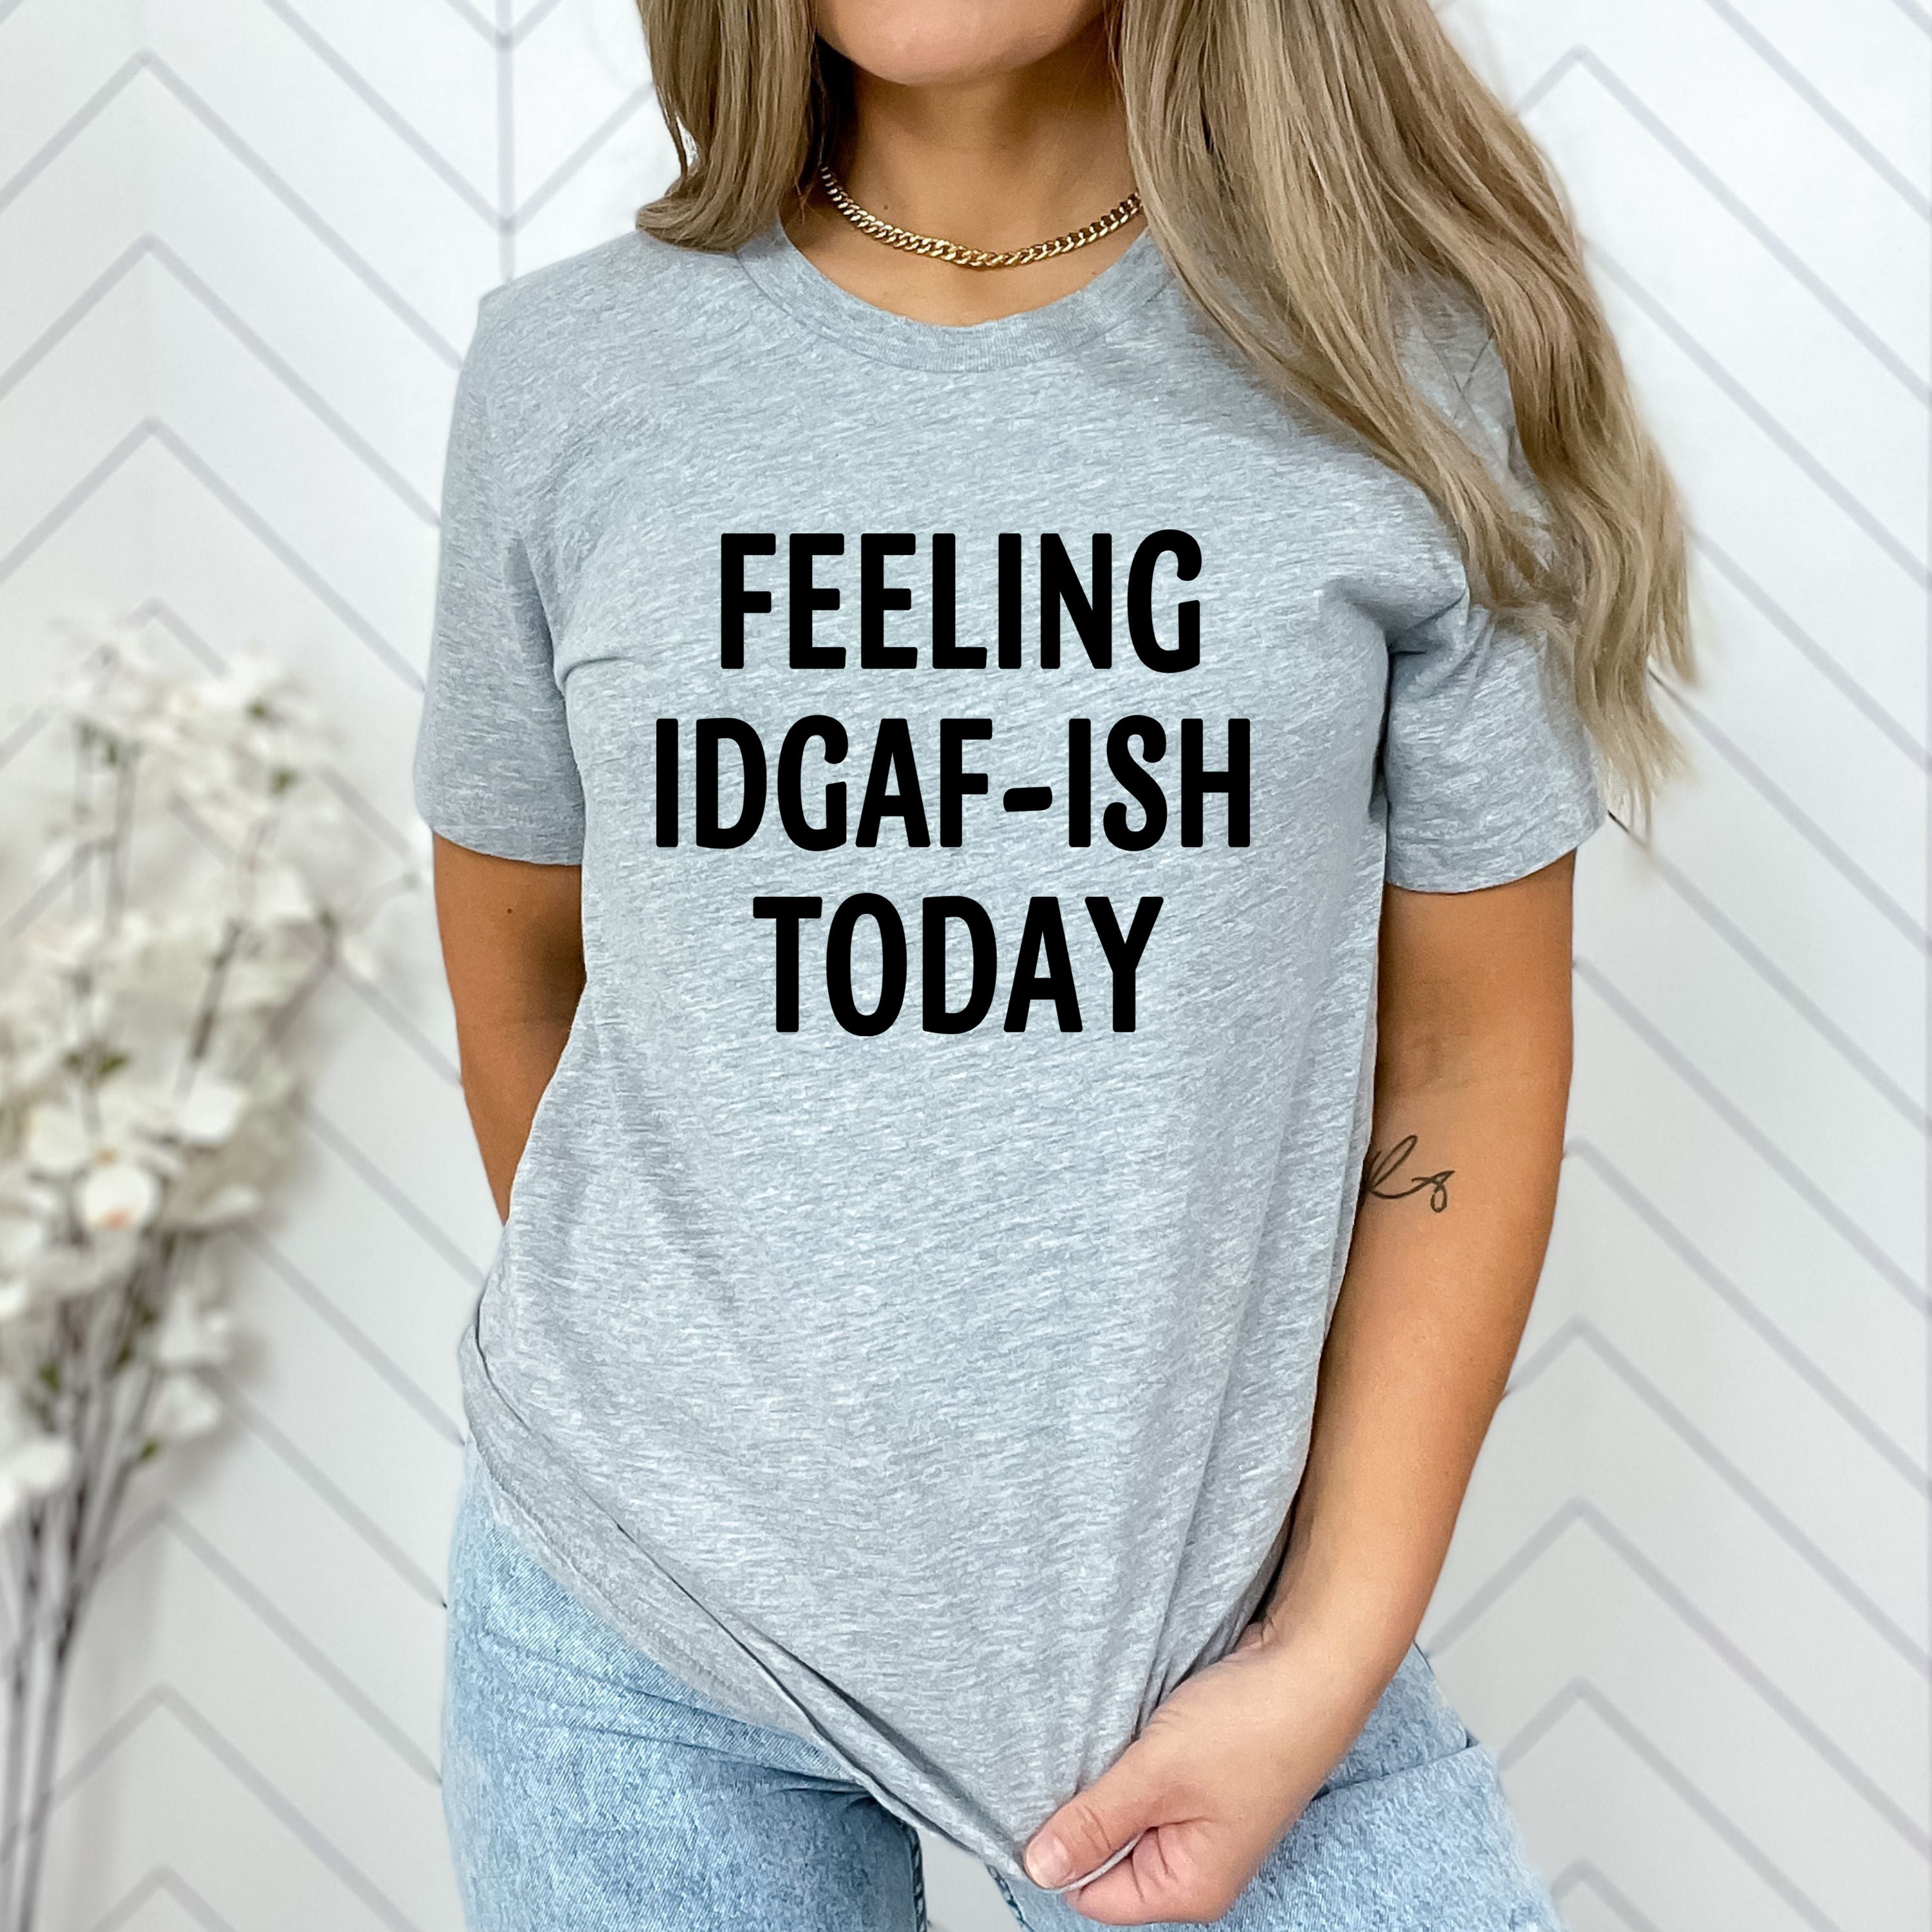 "FEELING IDGAF-ISH TODAY"